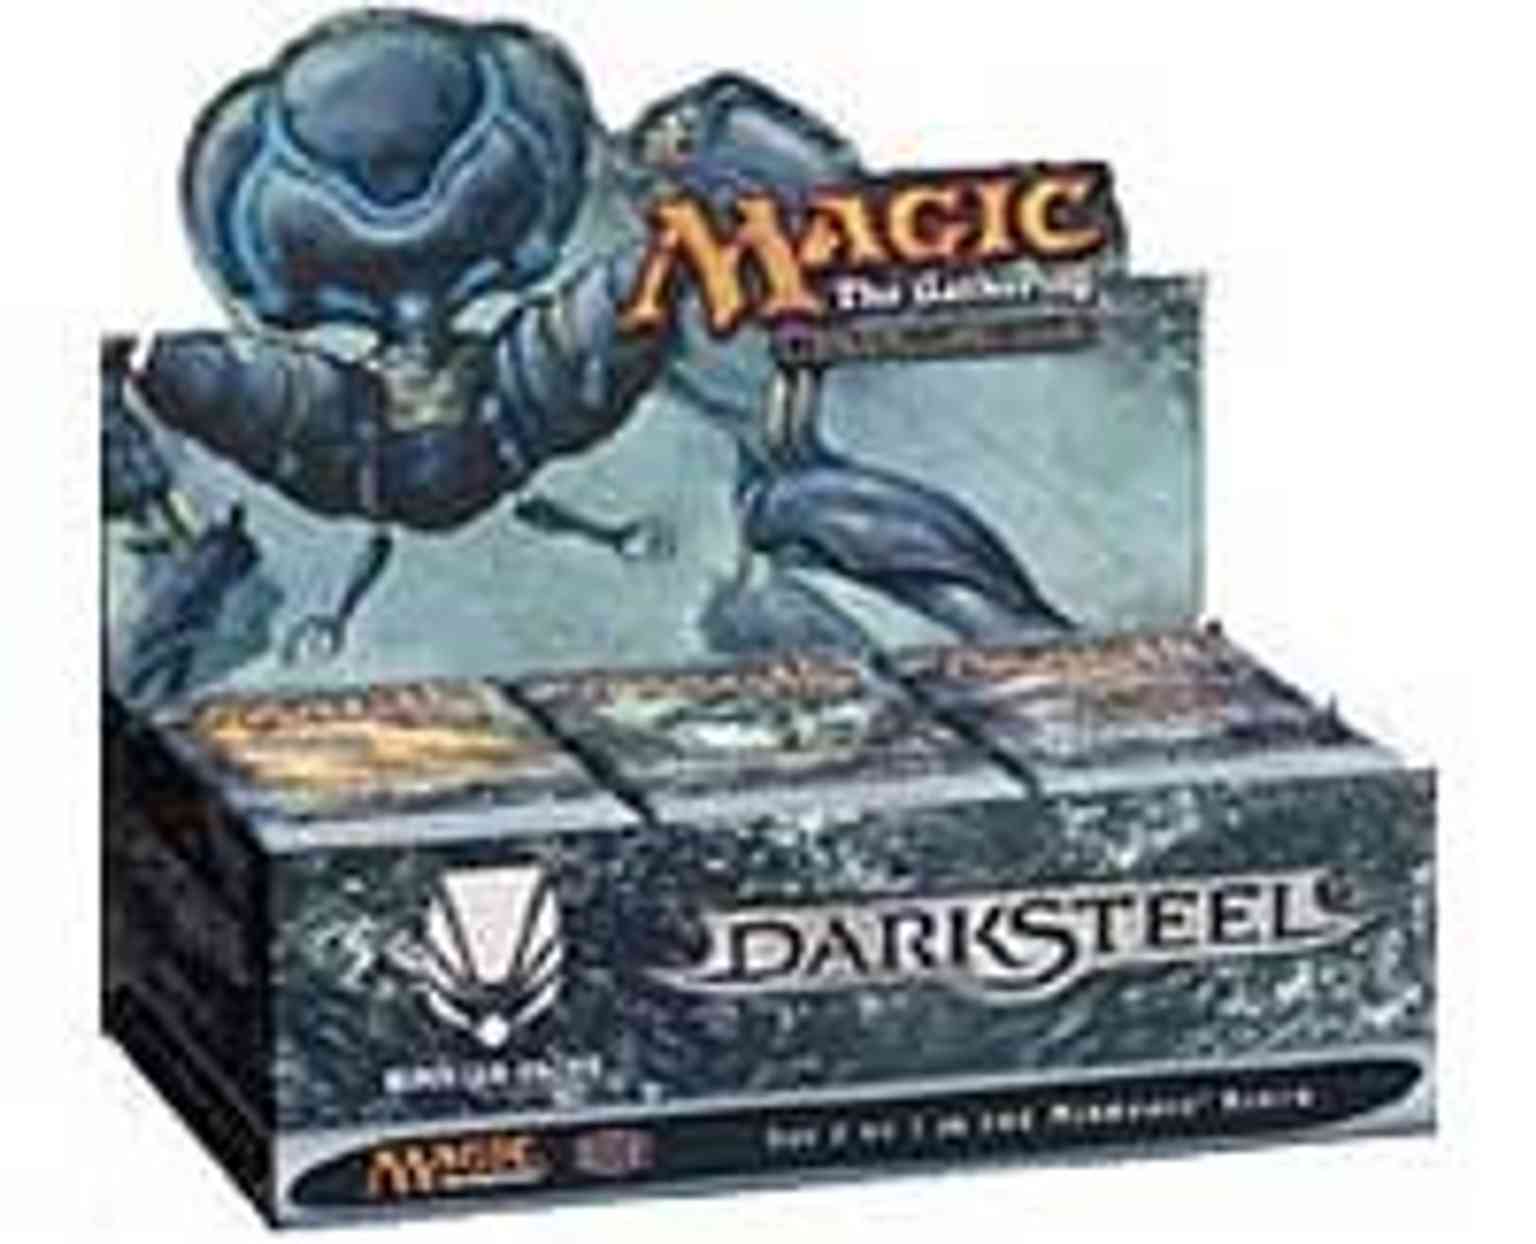 Darksteel - Booster Box magic card front